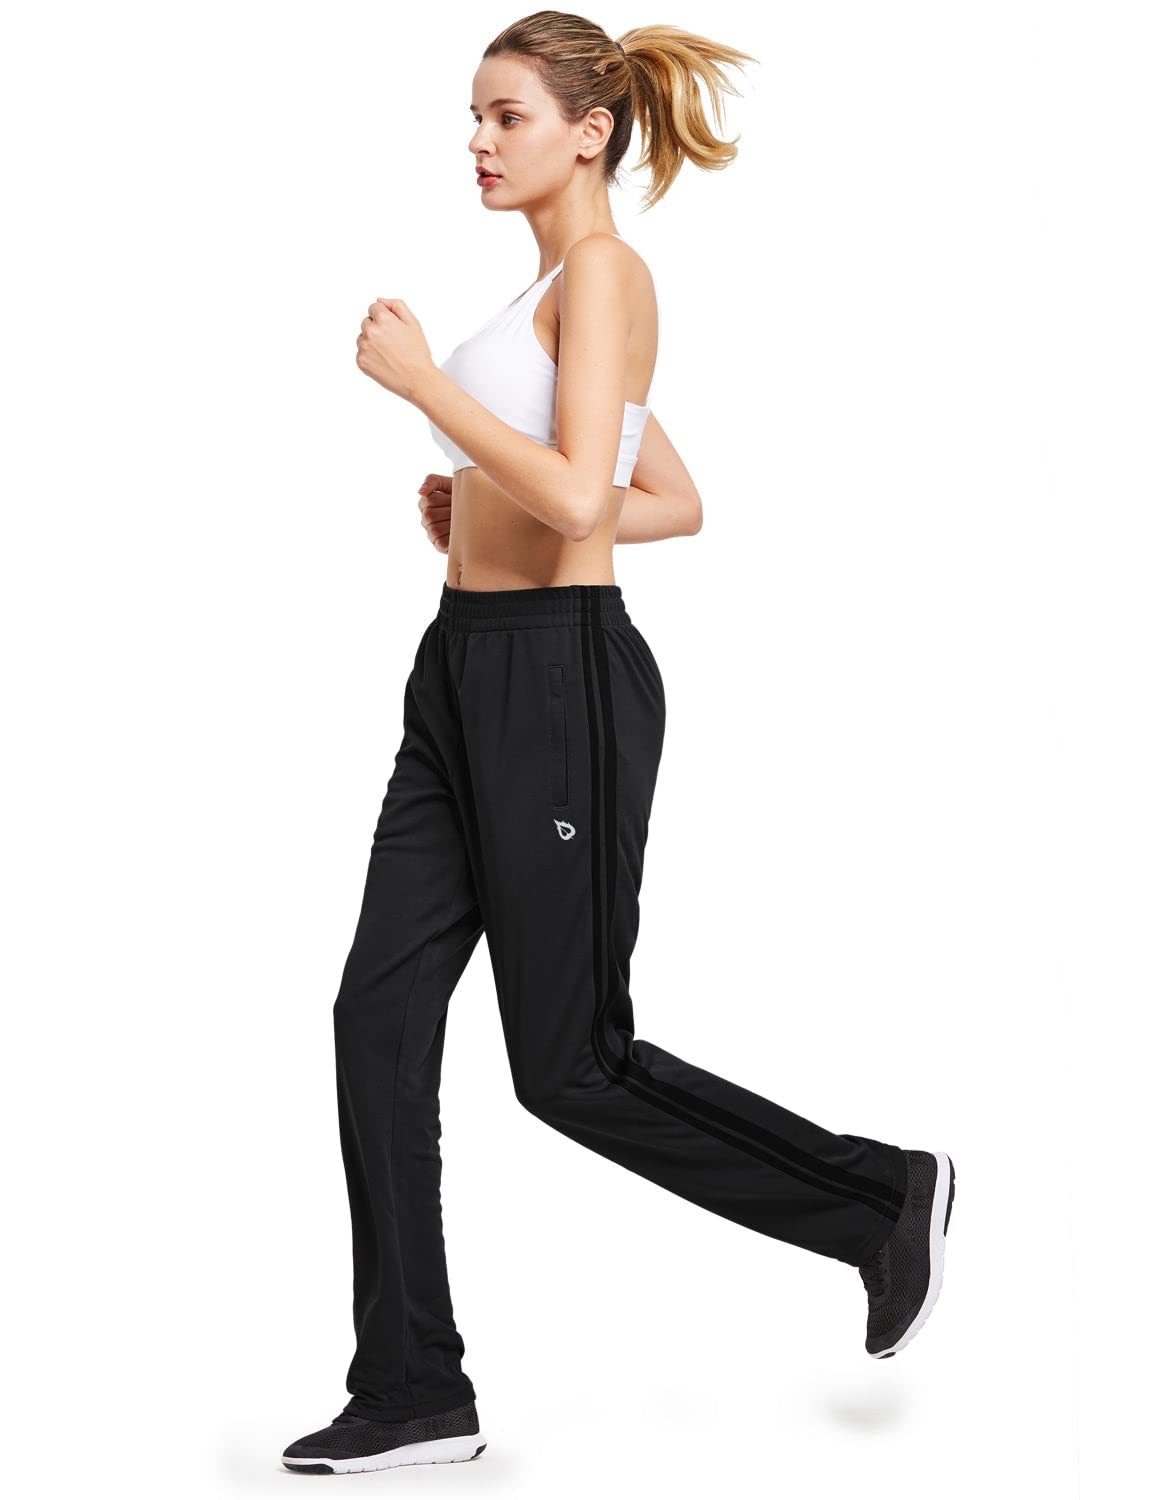 BALEAF Women's Track Pants Athletic Running Sweatpants Zipper Pockets Warm-Up Sports Jogging Pants Casual Lightweight